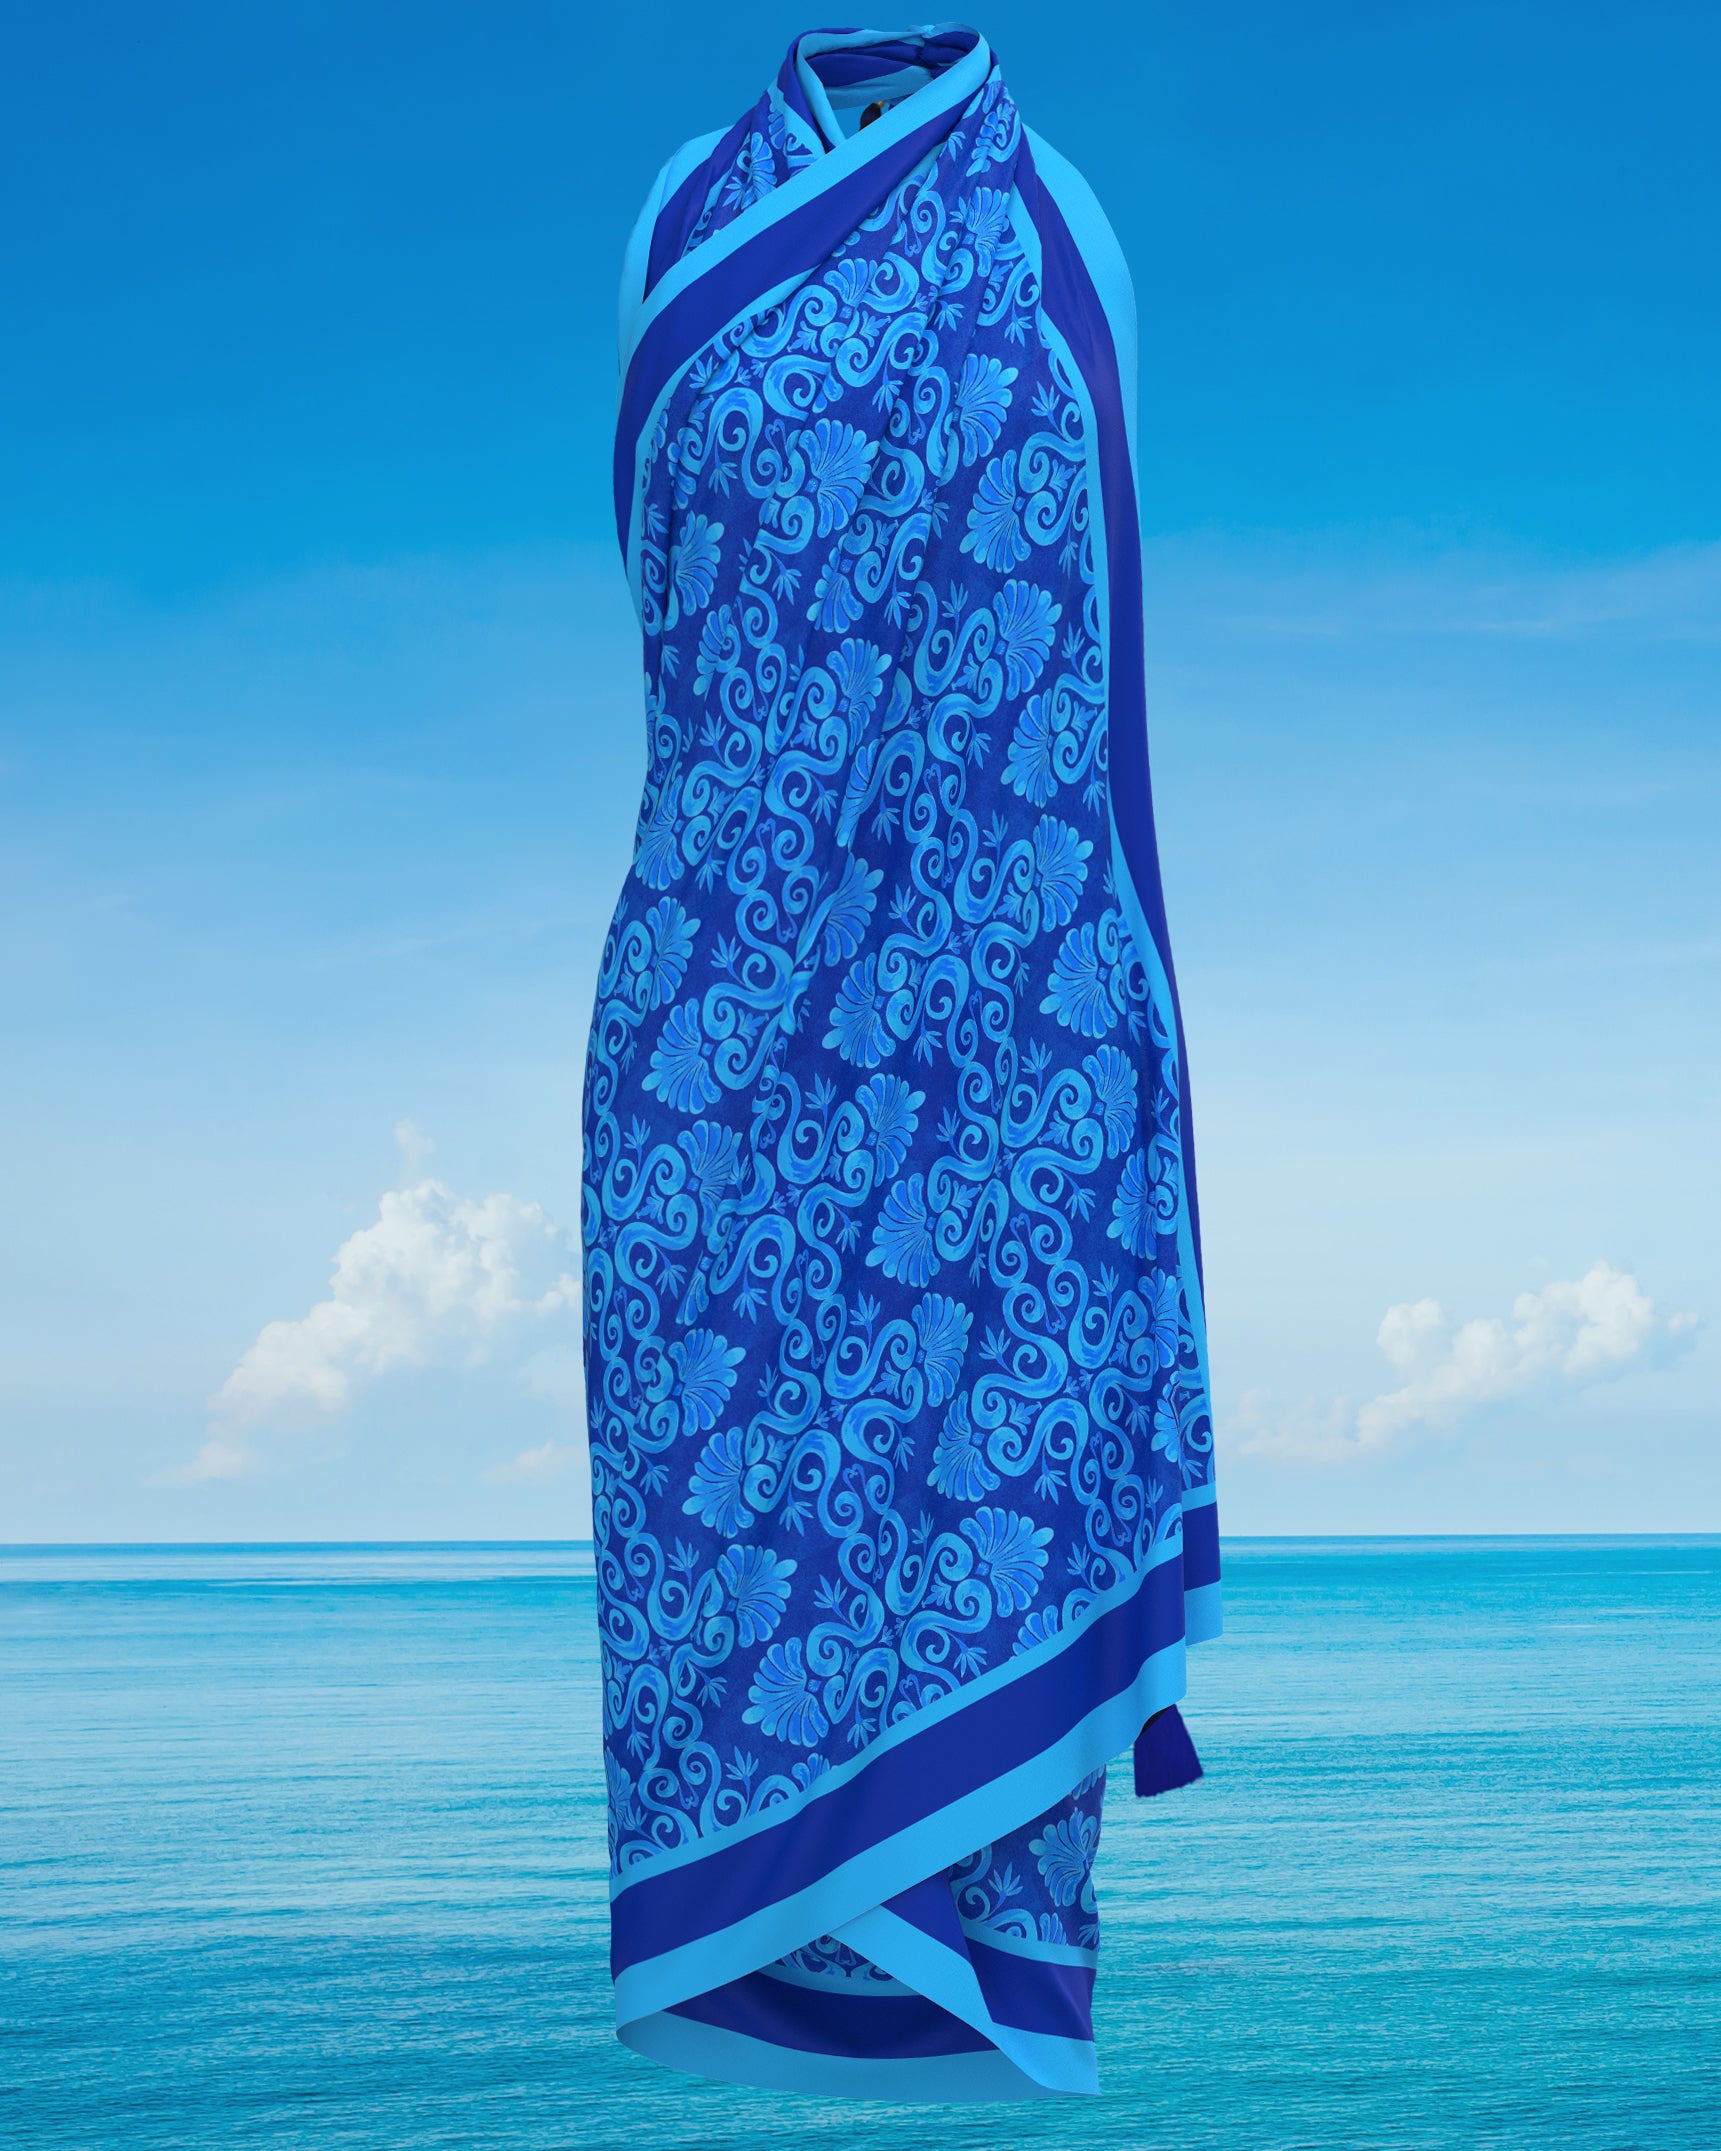 Thetis Organic Cotton Pareo in Mediterranean Blue tied as a halter dress